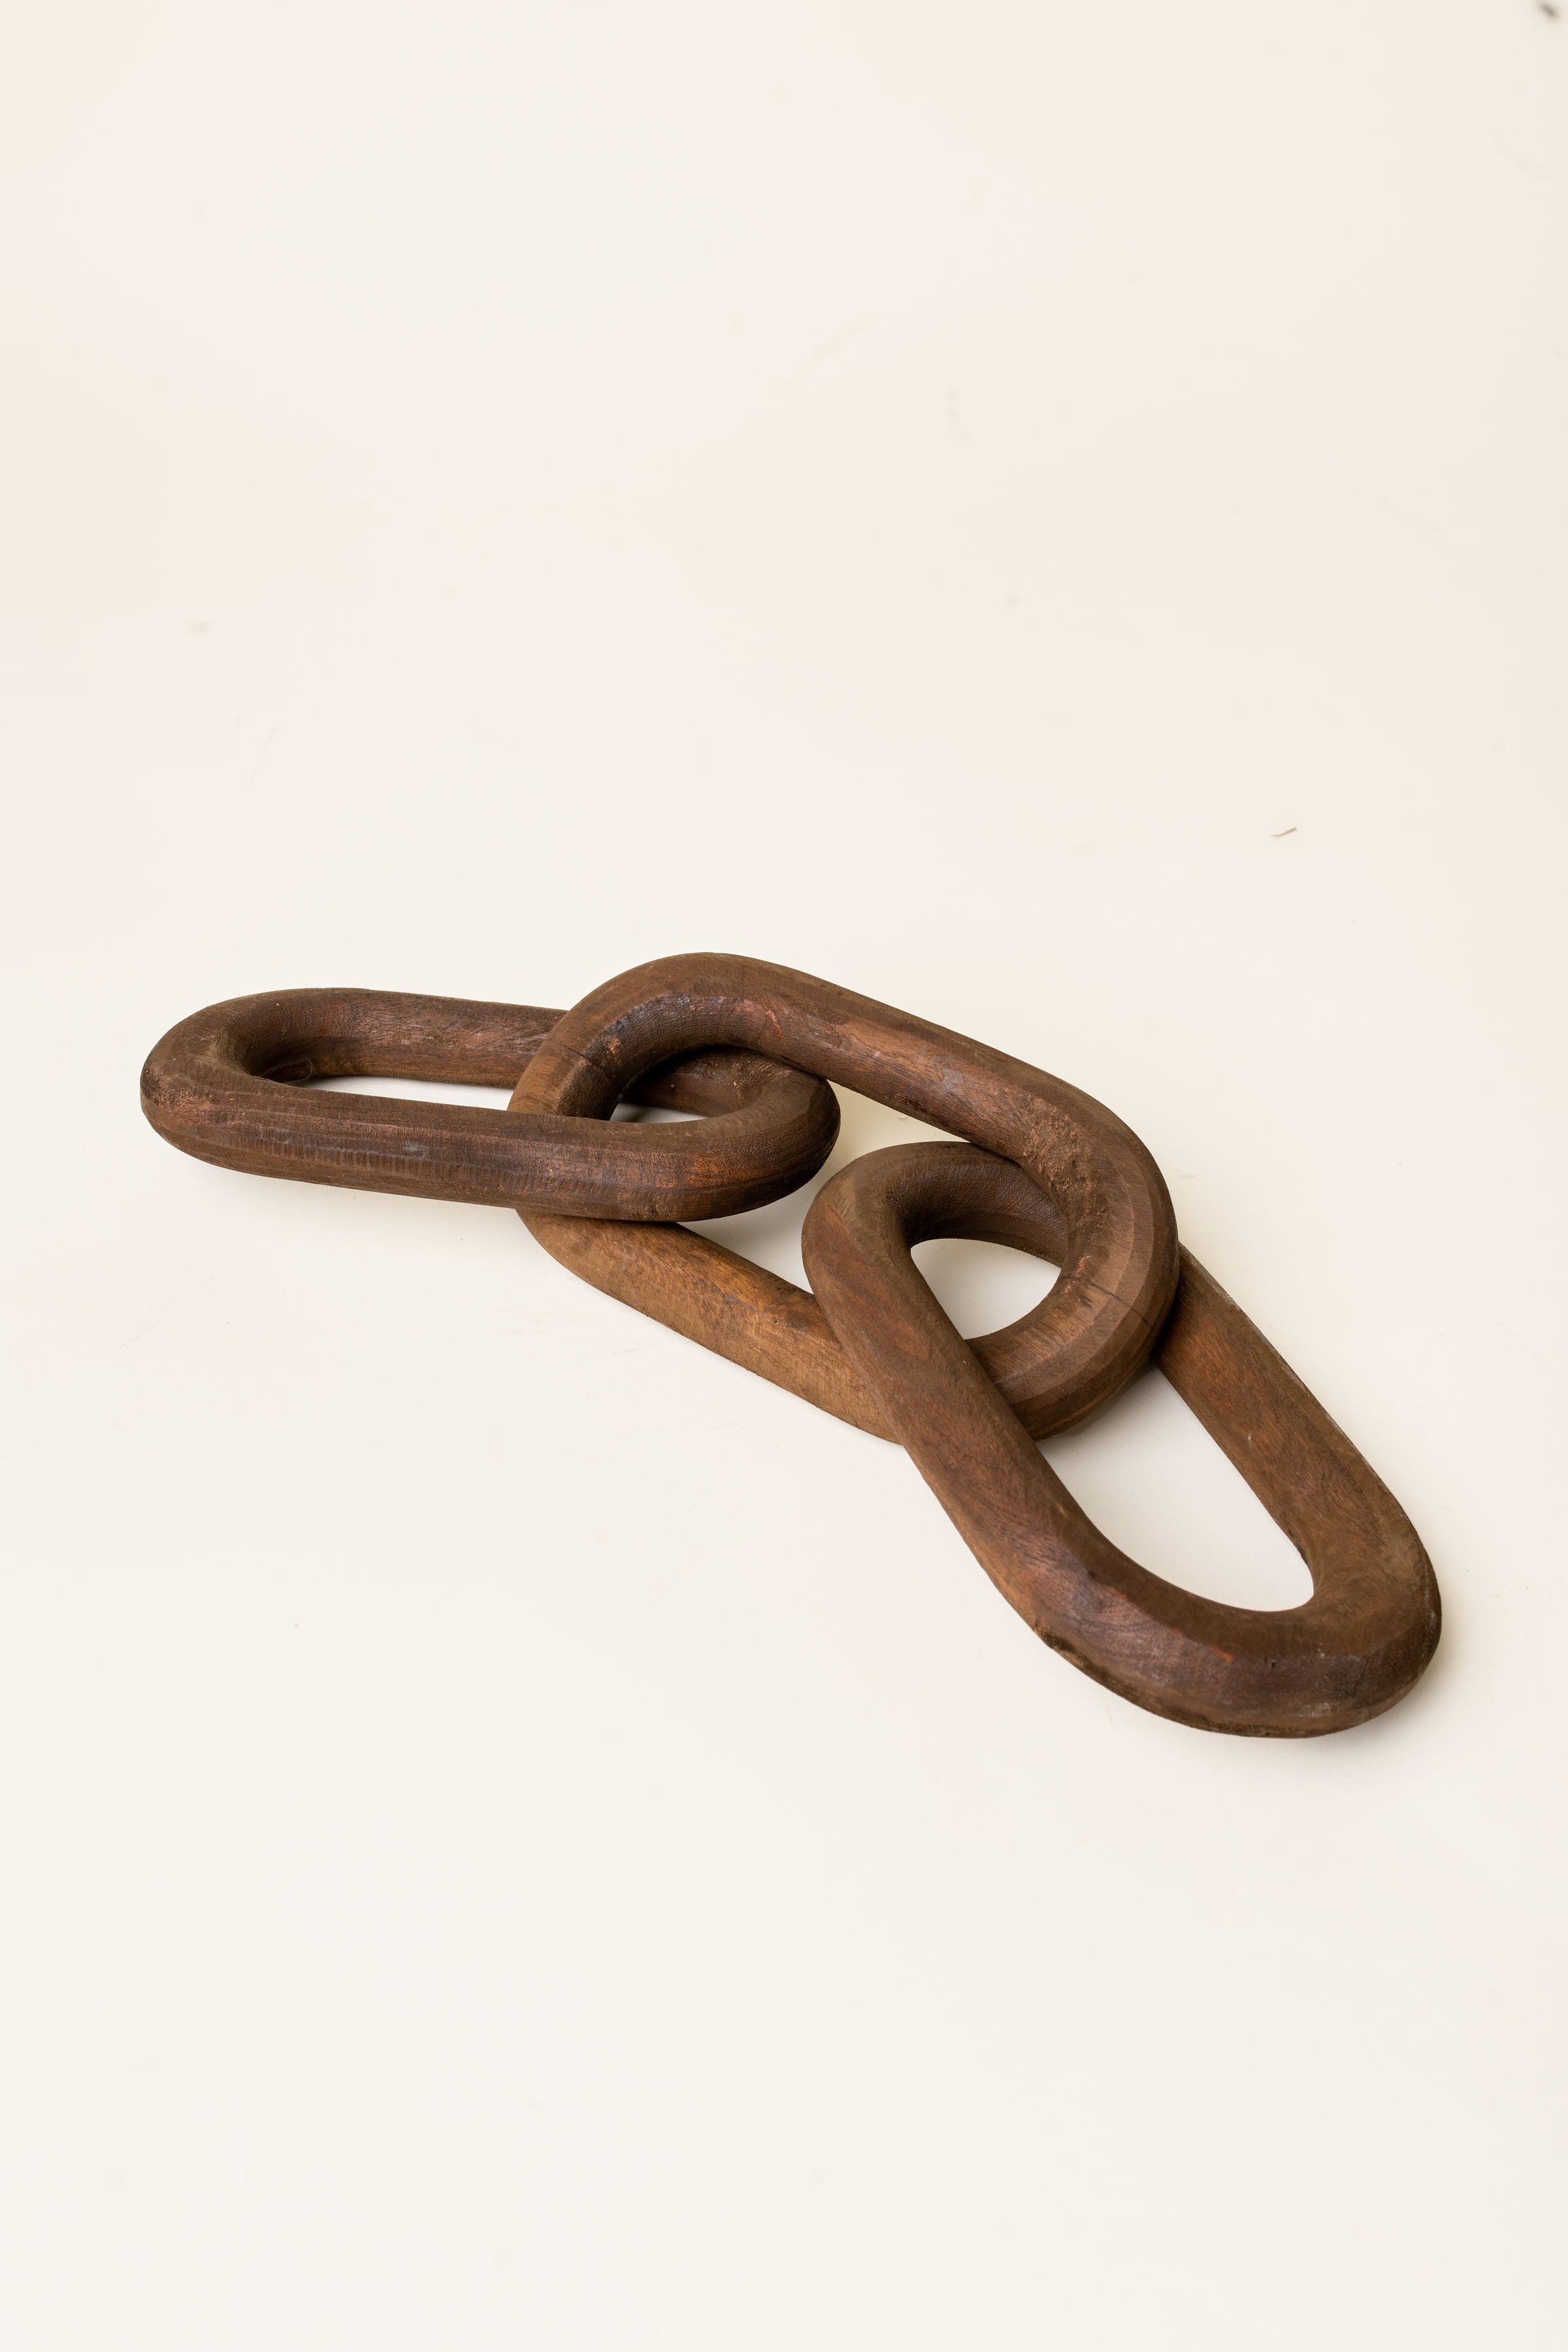 Reclaimed Wood Chain Link - Joy Meets Home